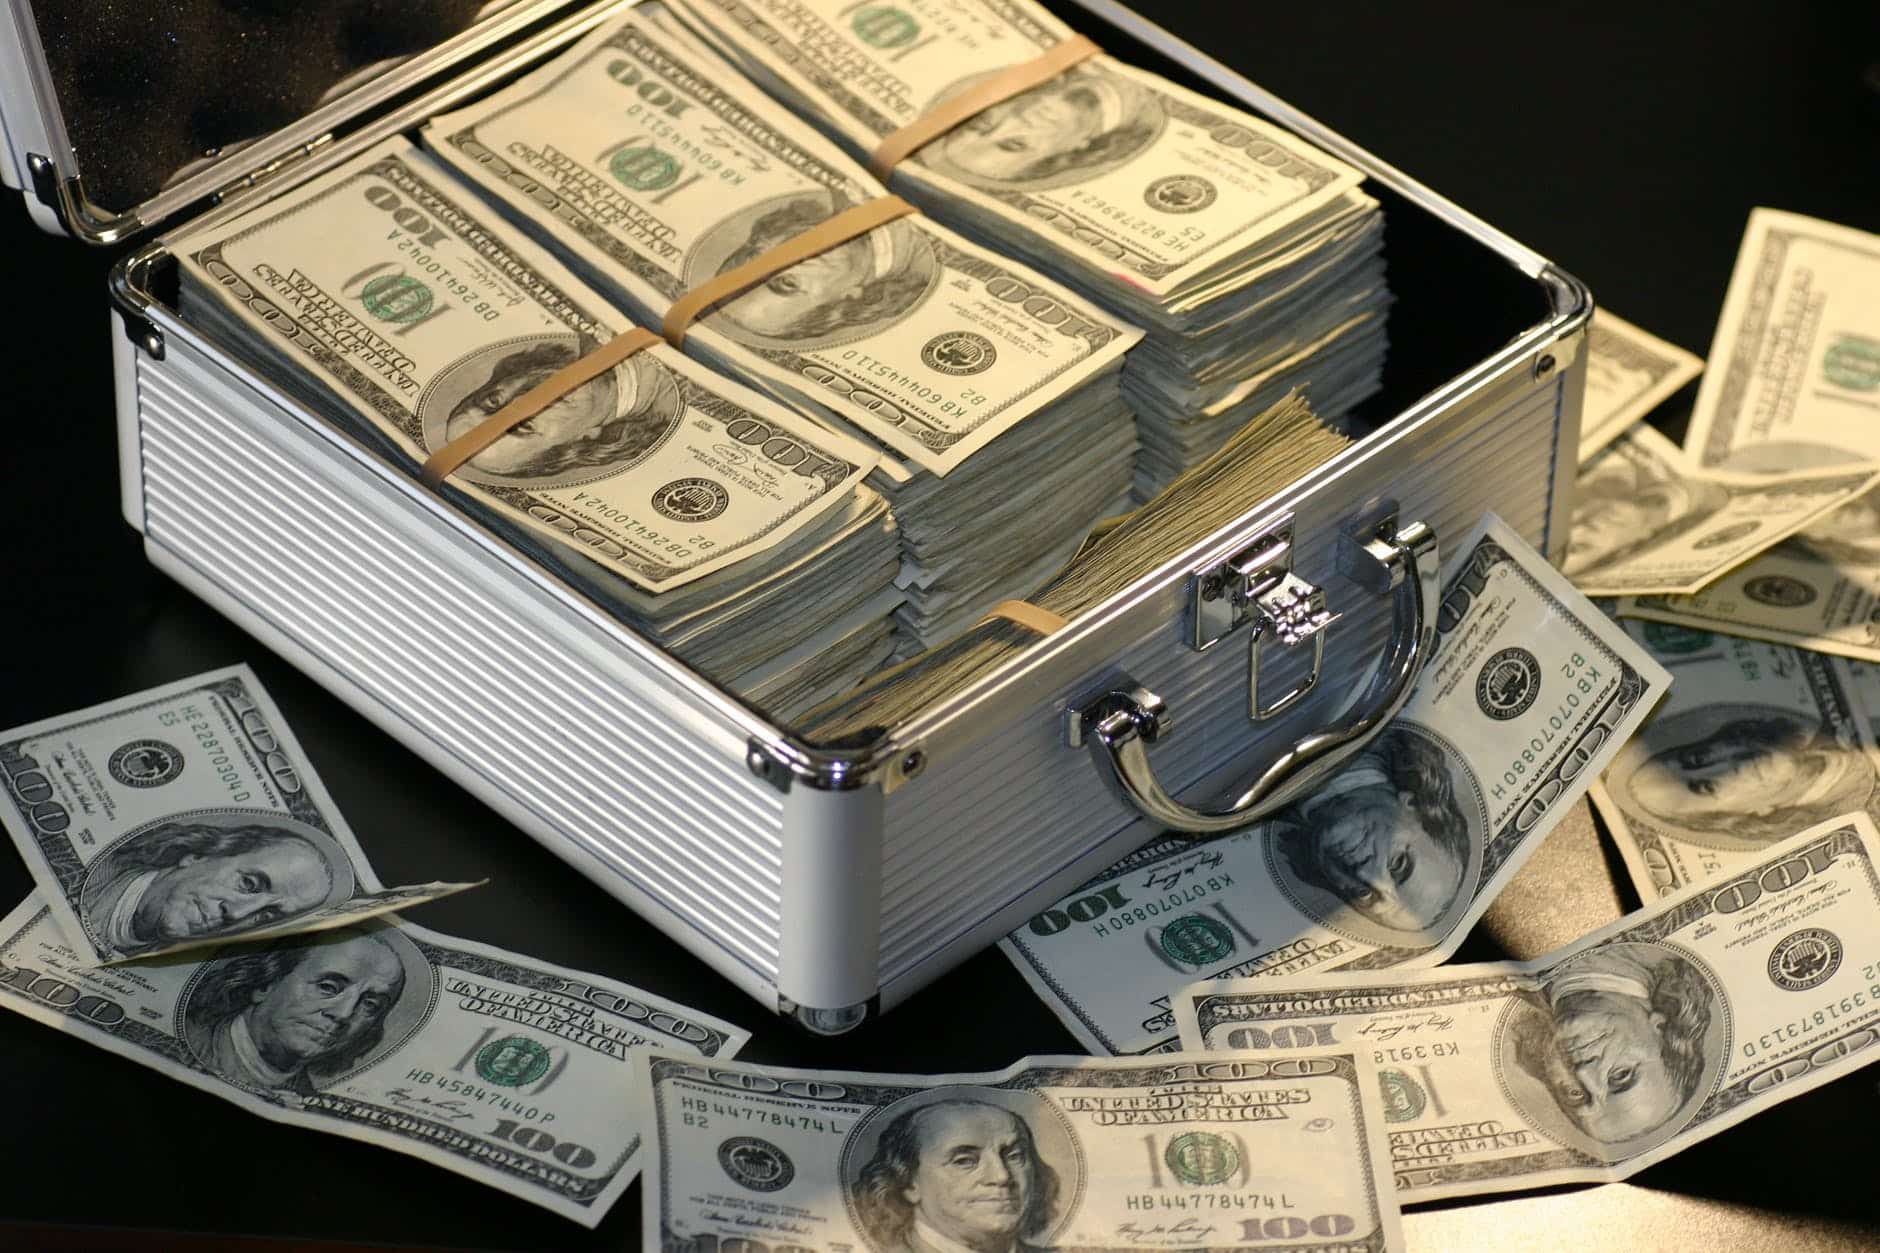 Case full of $100 bills